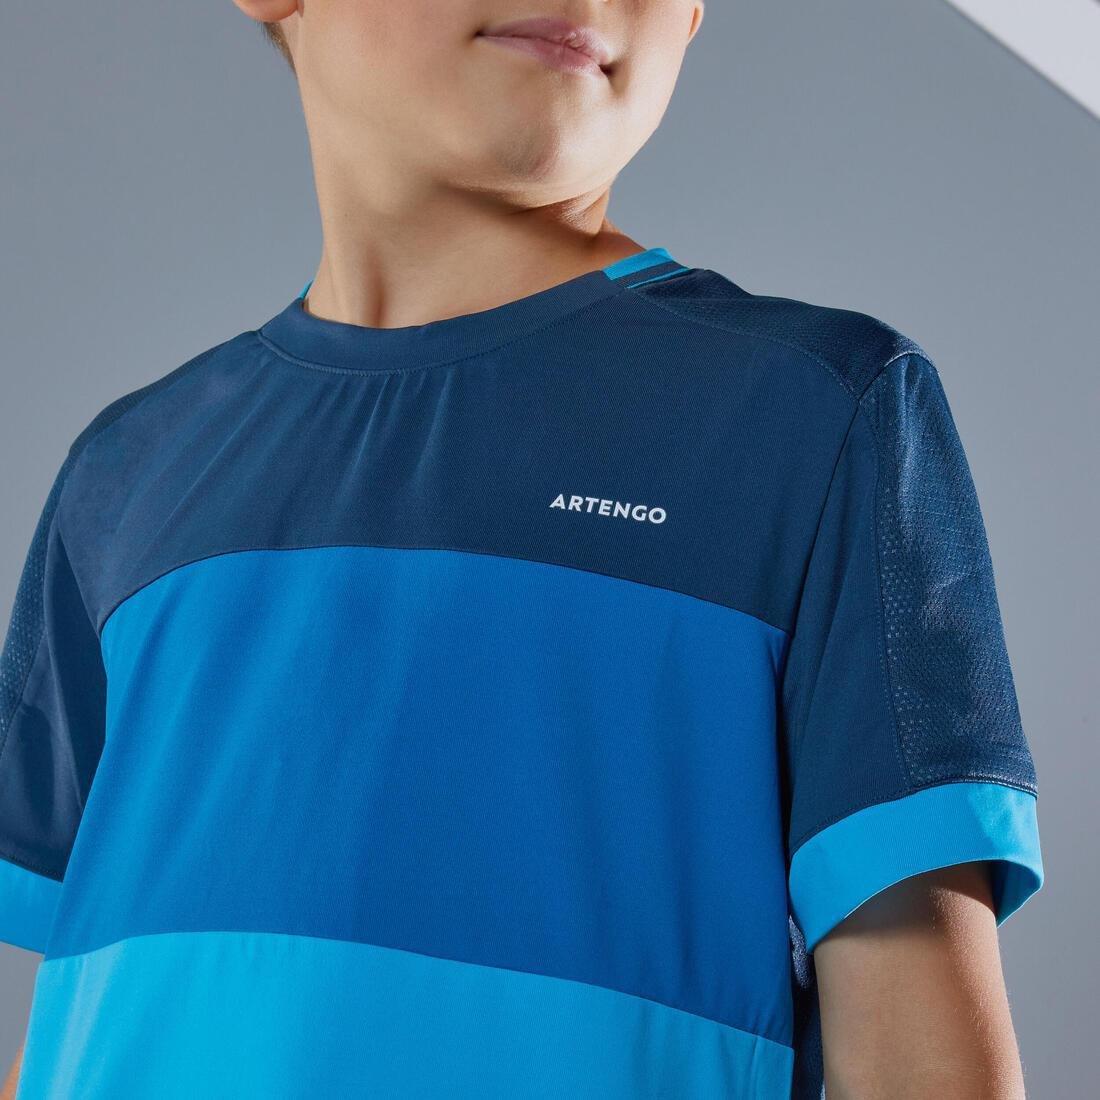 ARTENGO - Boys' Tennis T-Shirt Dry 500, Inkpot blue